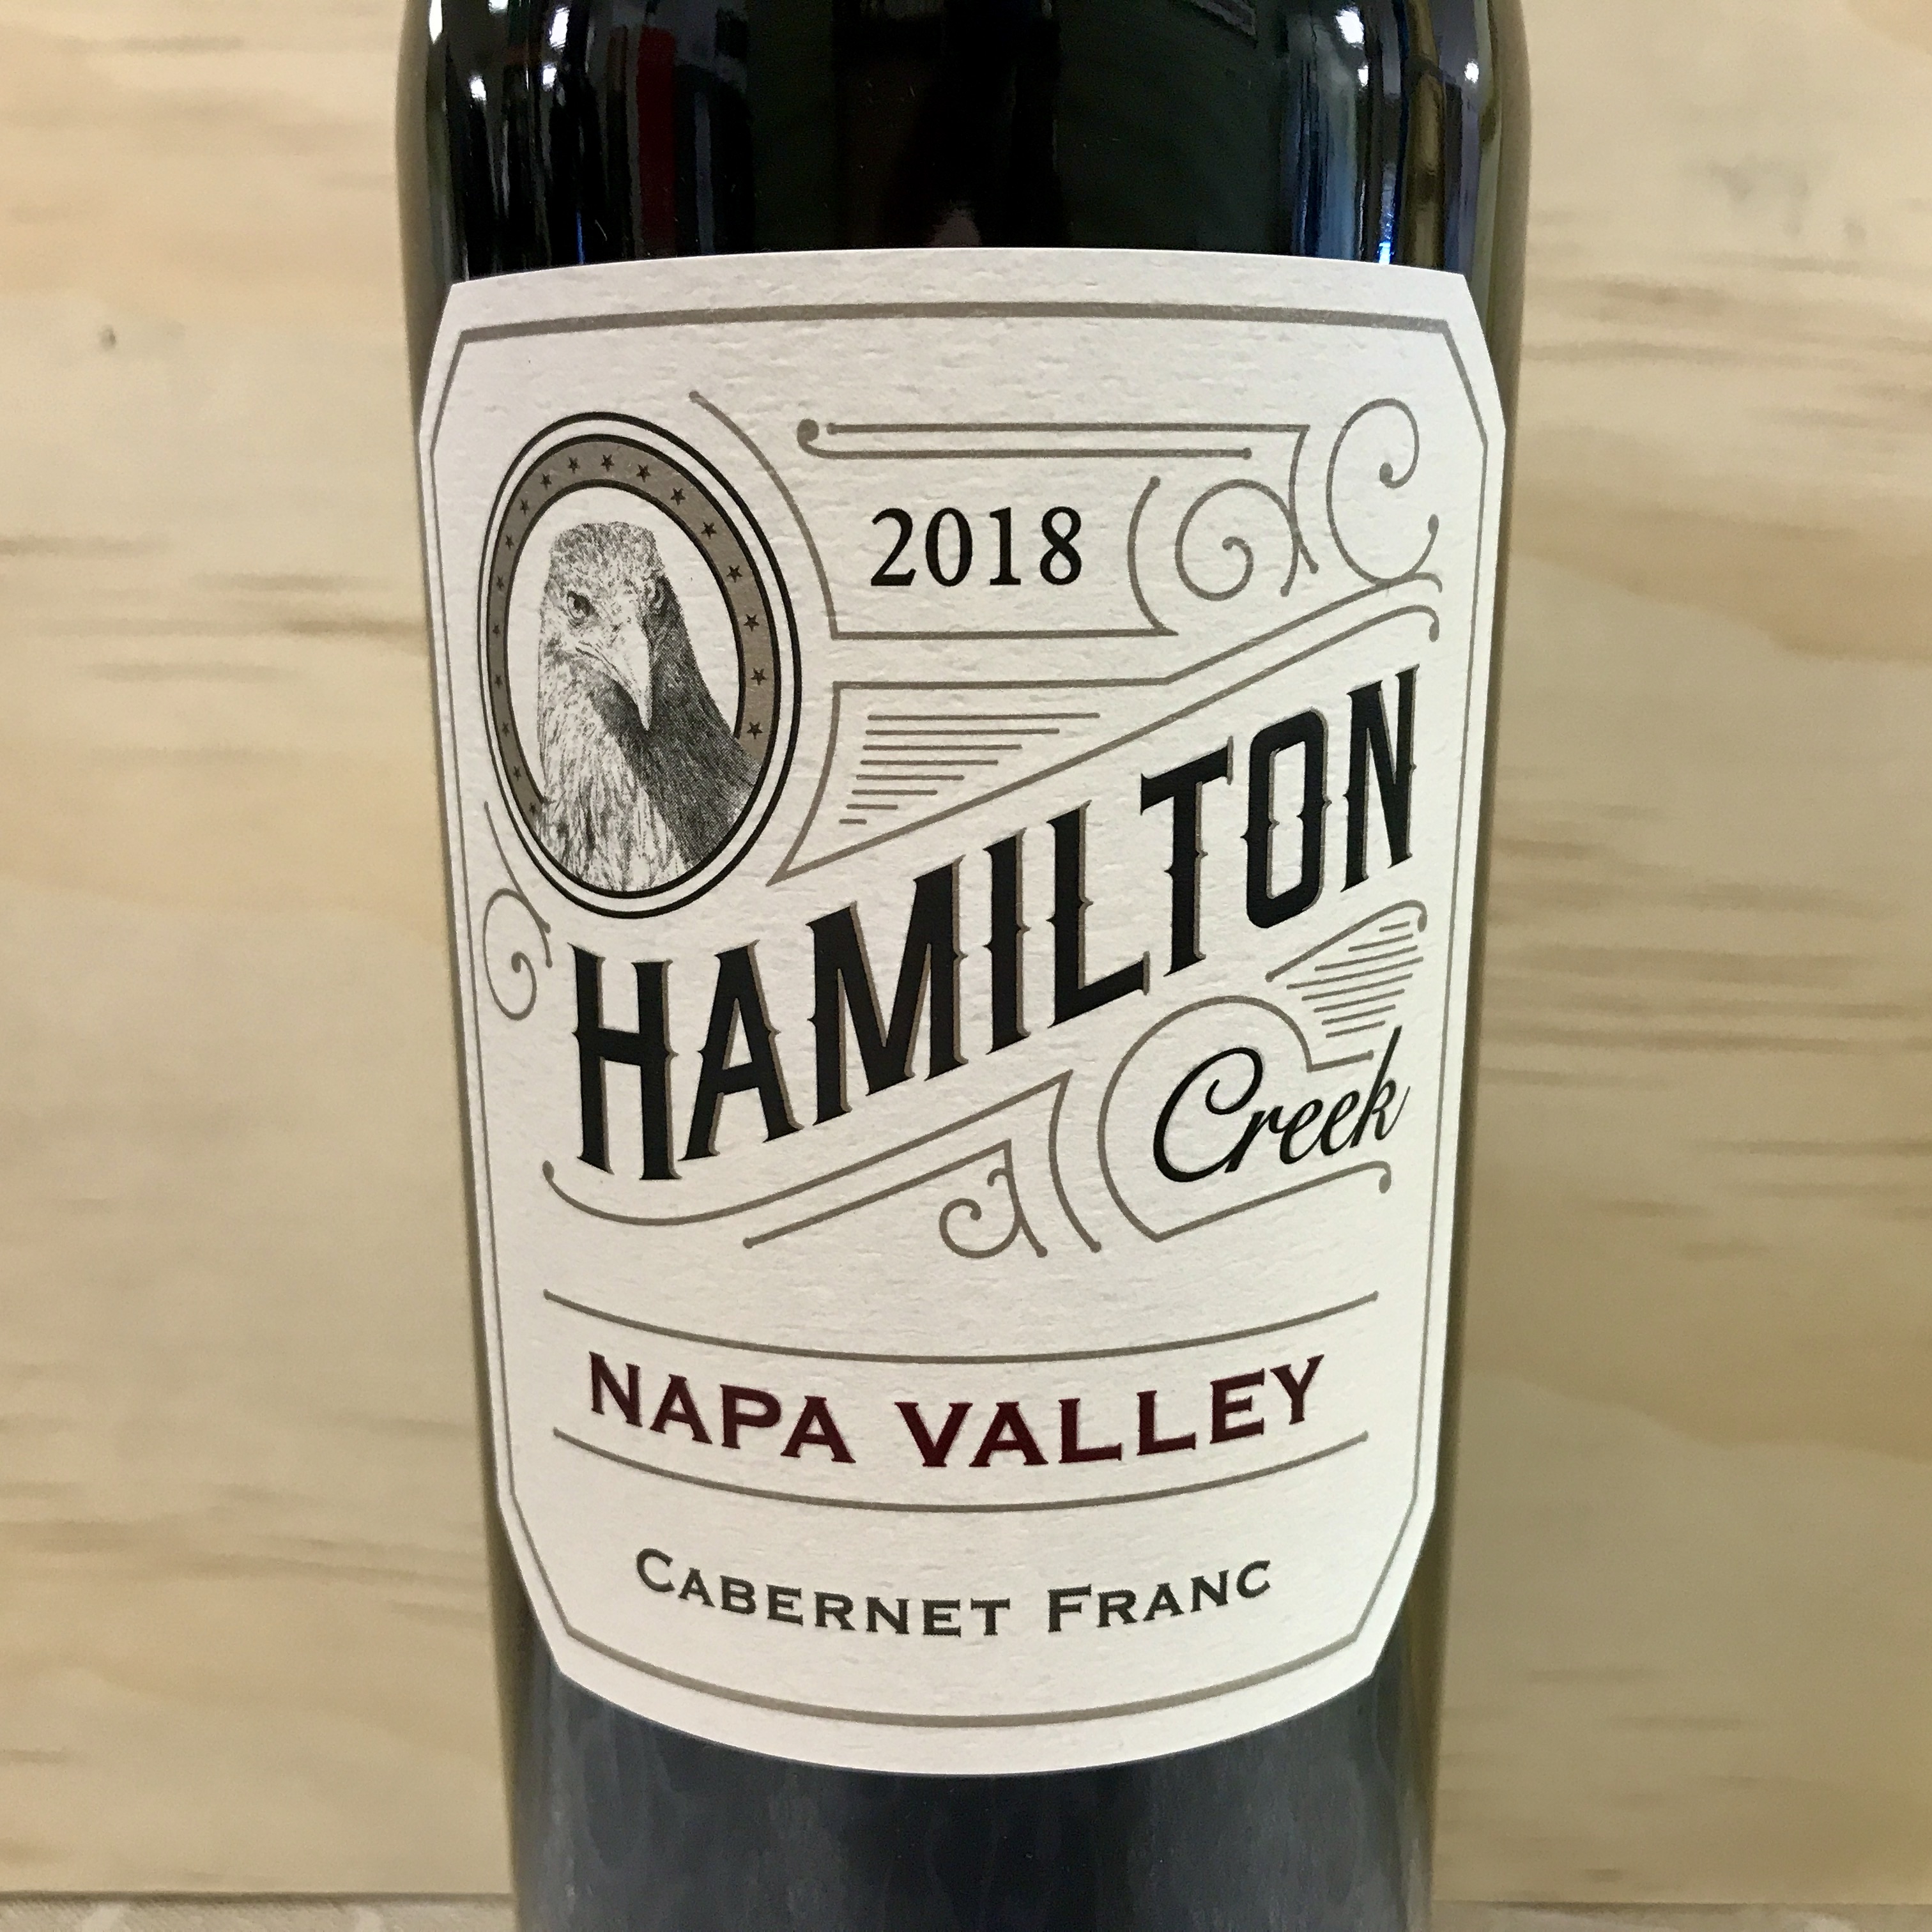 Hamilton Creek Napa Valley Cabernet Franc 2018